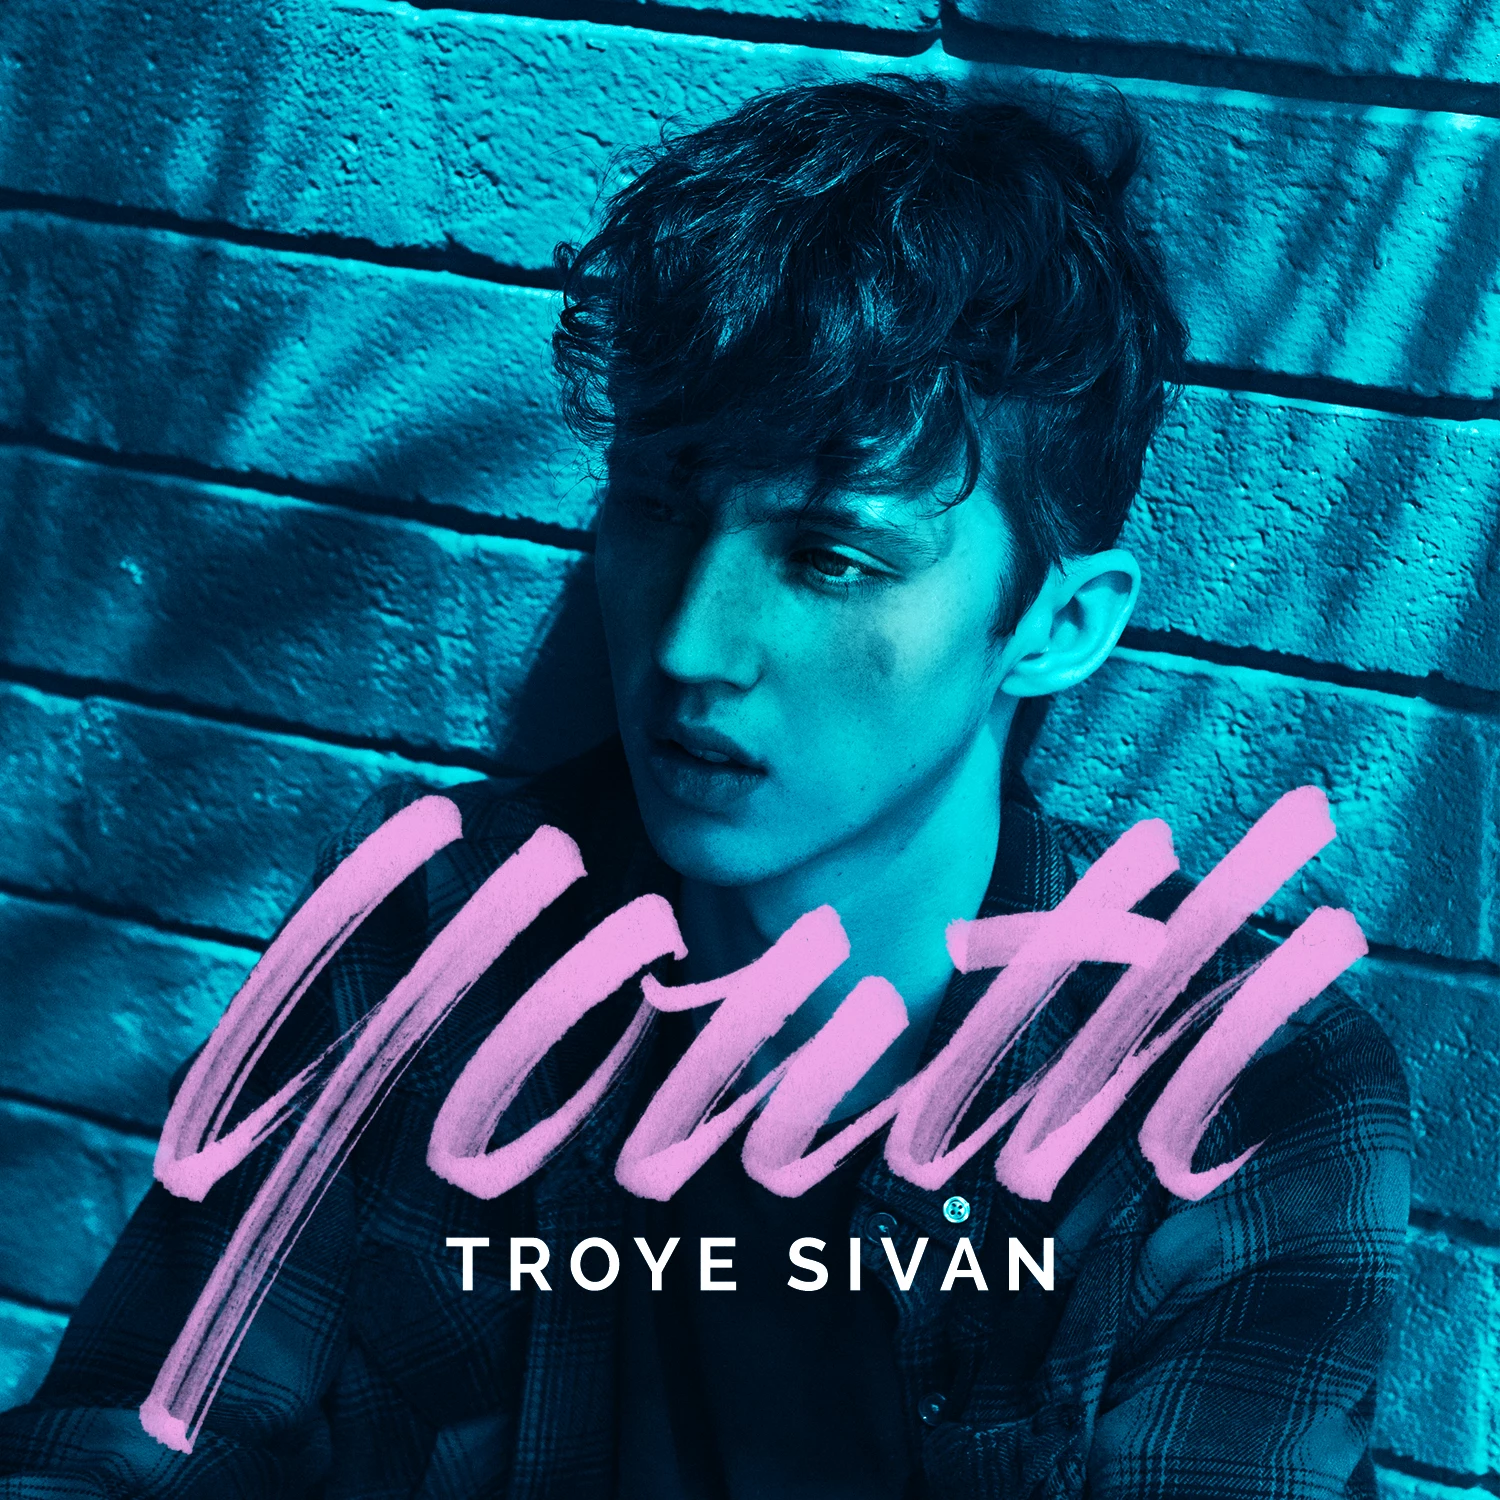 Troye Sivan Looks Appropriately 'Blue' On 'Youth' Single Art, Drops 'Wild' Remix